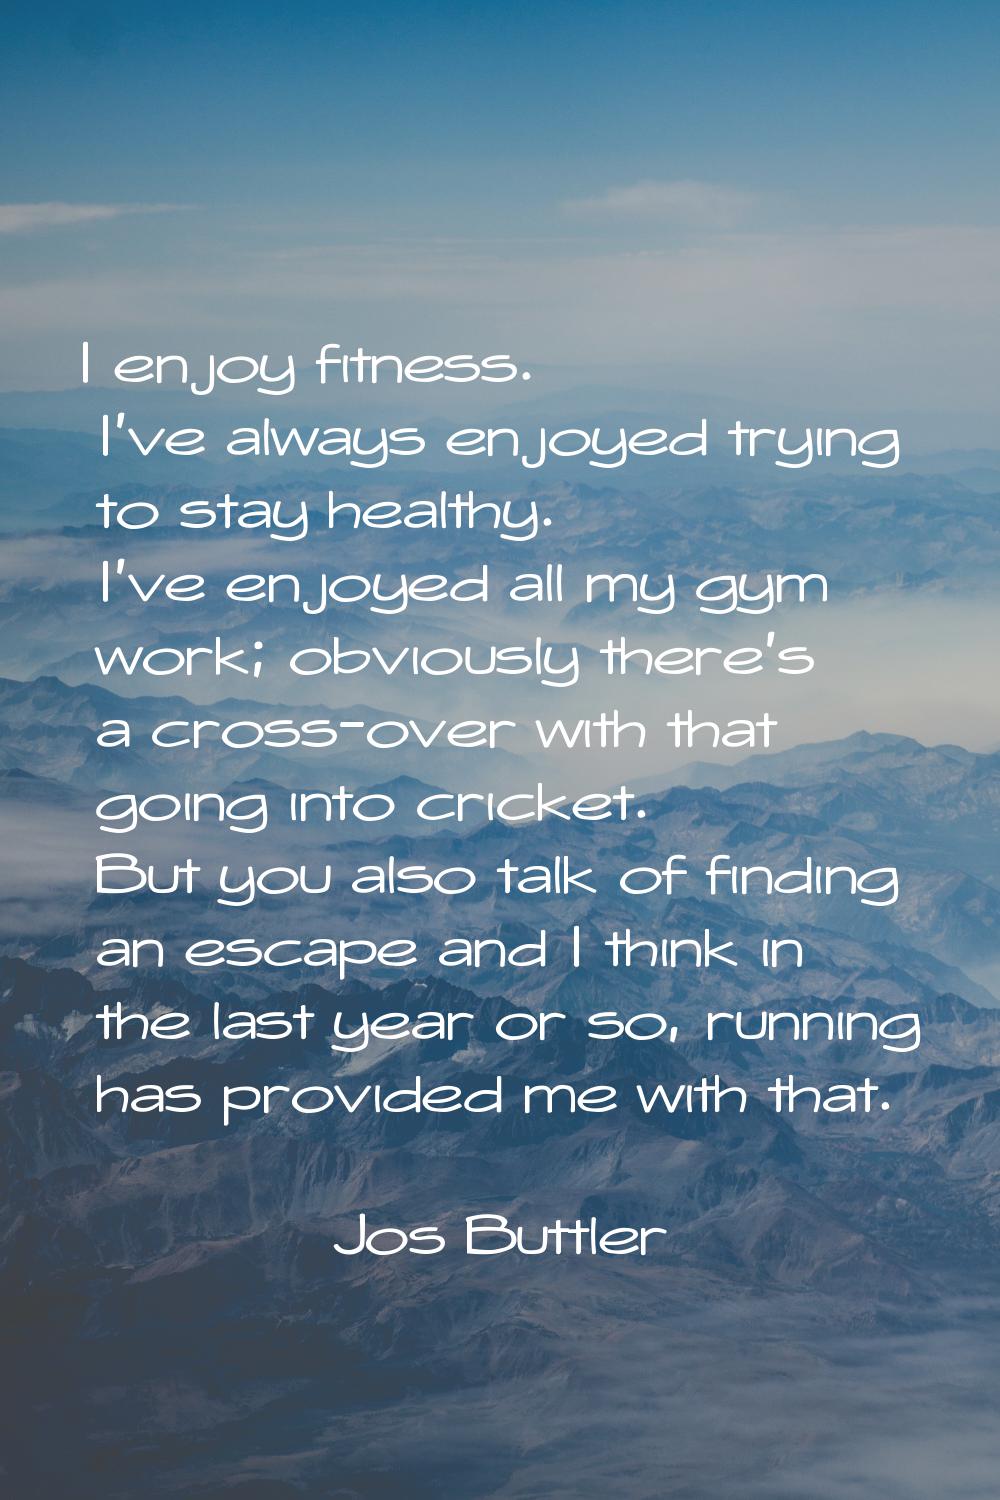 I enjoy fitness. I've always enjoyed trying to stay healthy. I've enjoyed all my gym work; obviousl